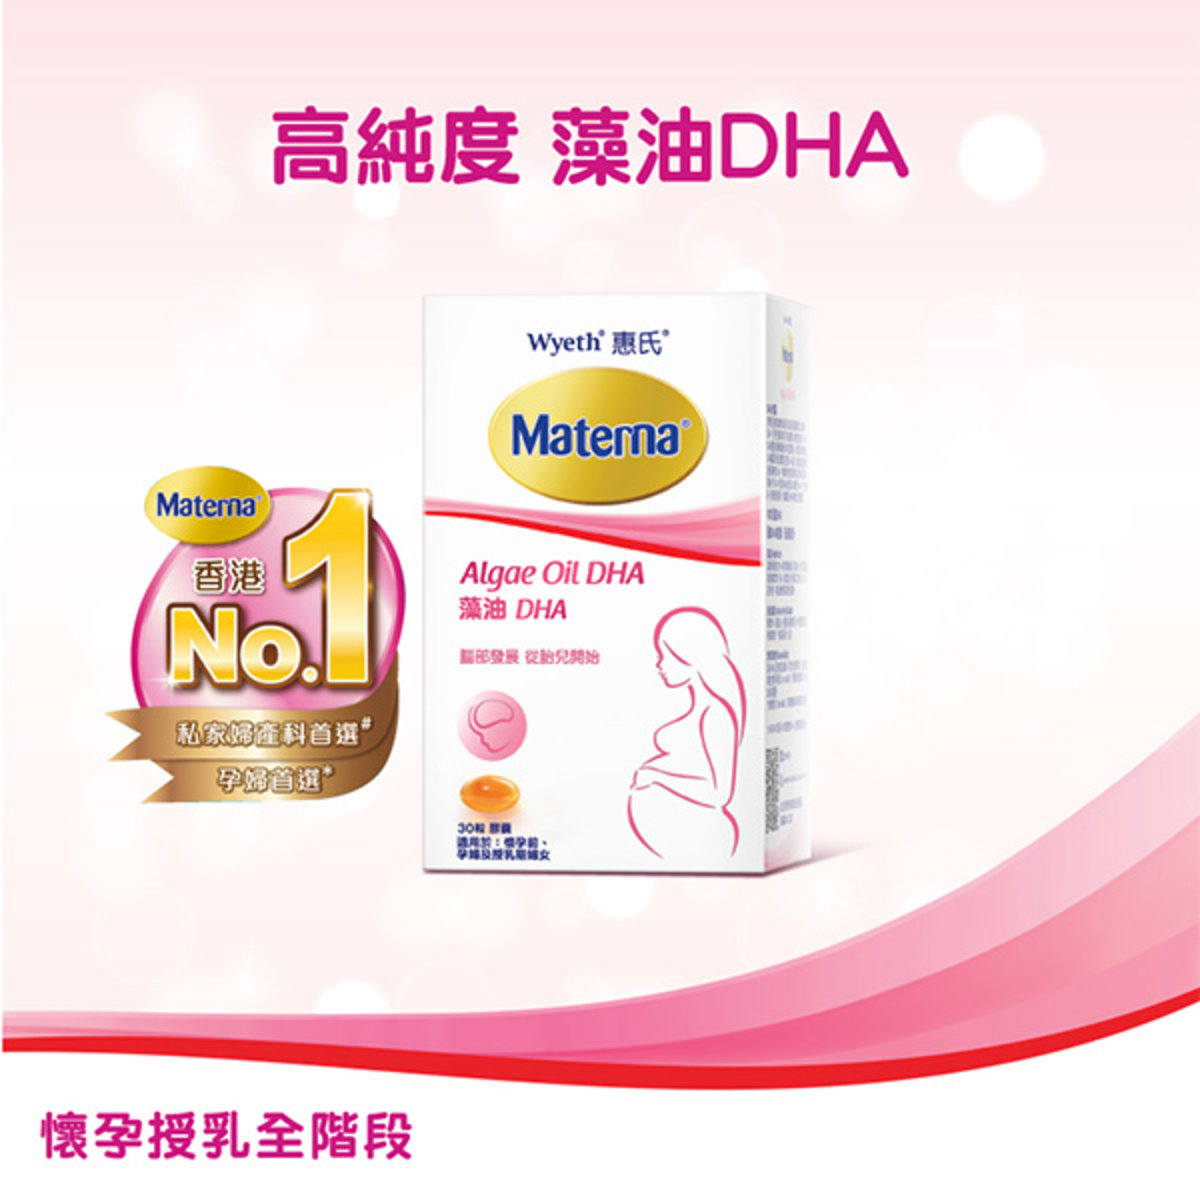 Materna® 藻油DHA 30粒 (懷孕前/孕婦/授乳期婦女適用) 高純度植物性DHA / 含200毫克DHA / 滿足孕婦一日DHA所需